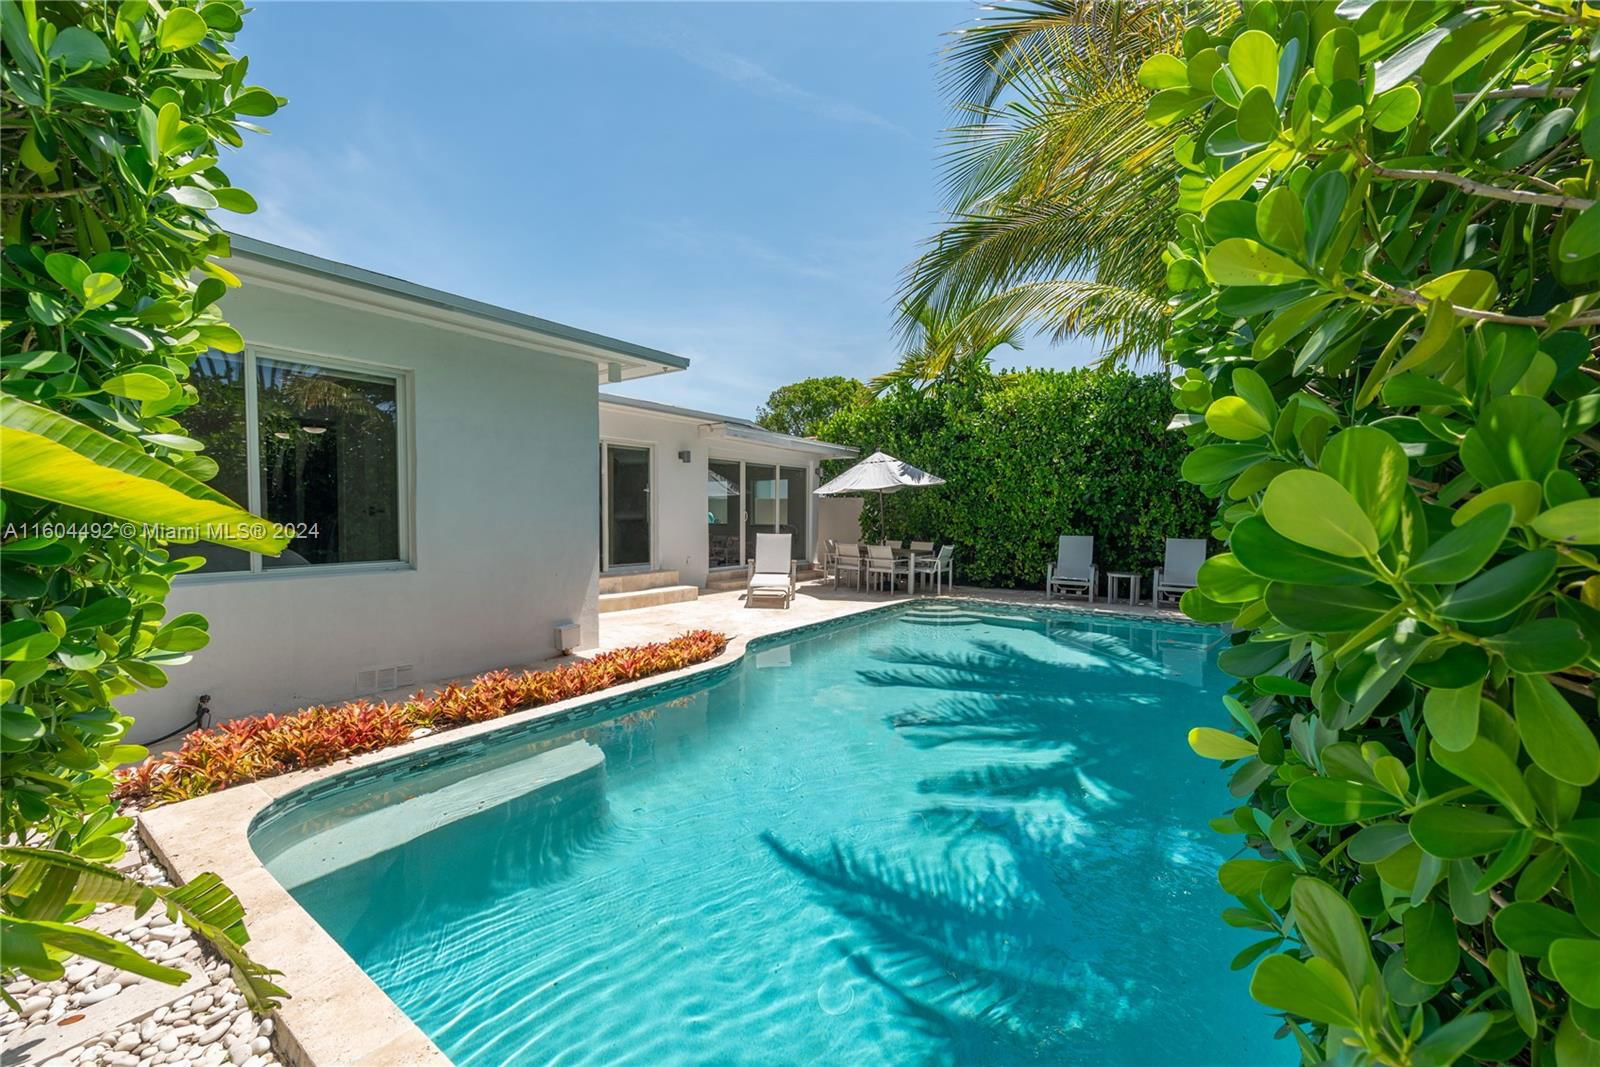 Real estate property located at 590 49th St, Miami-Dade County, LAKE VIEW SUB, Miami Beach, FL